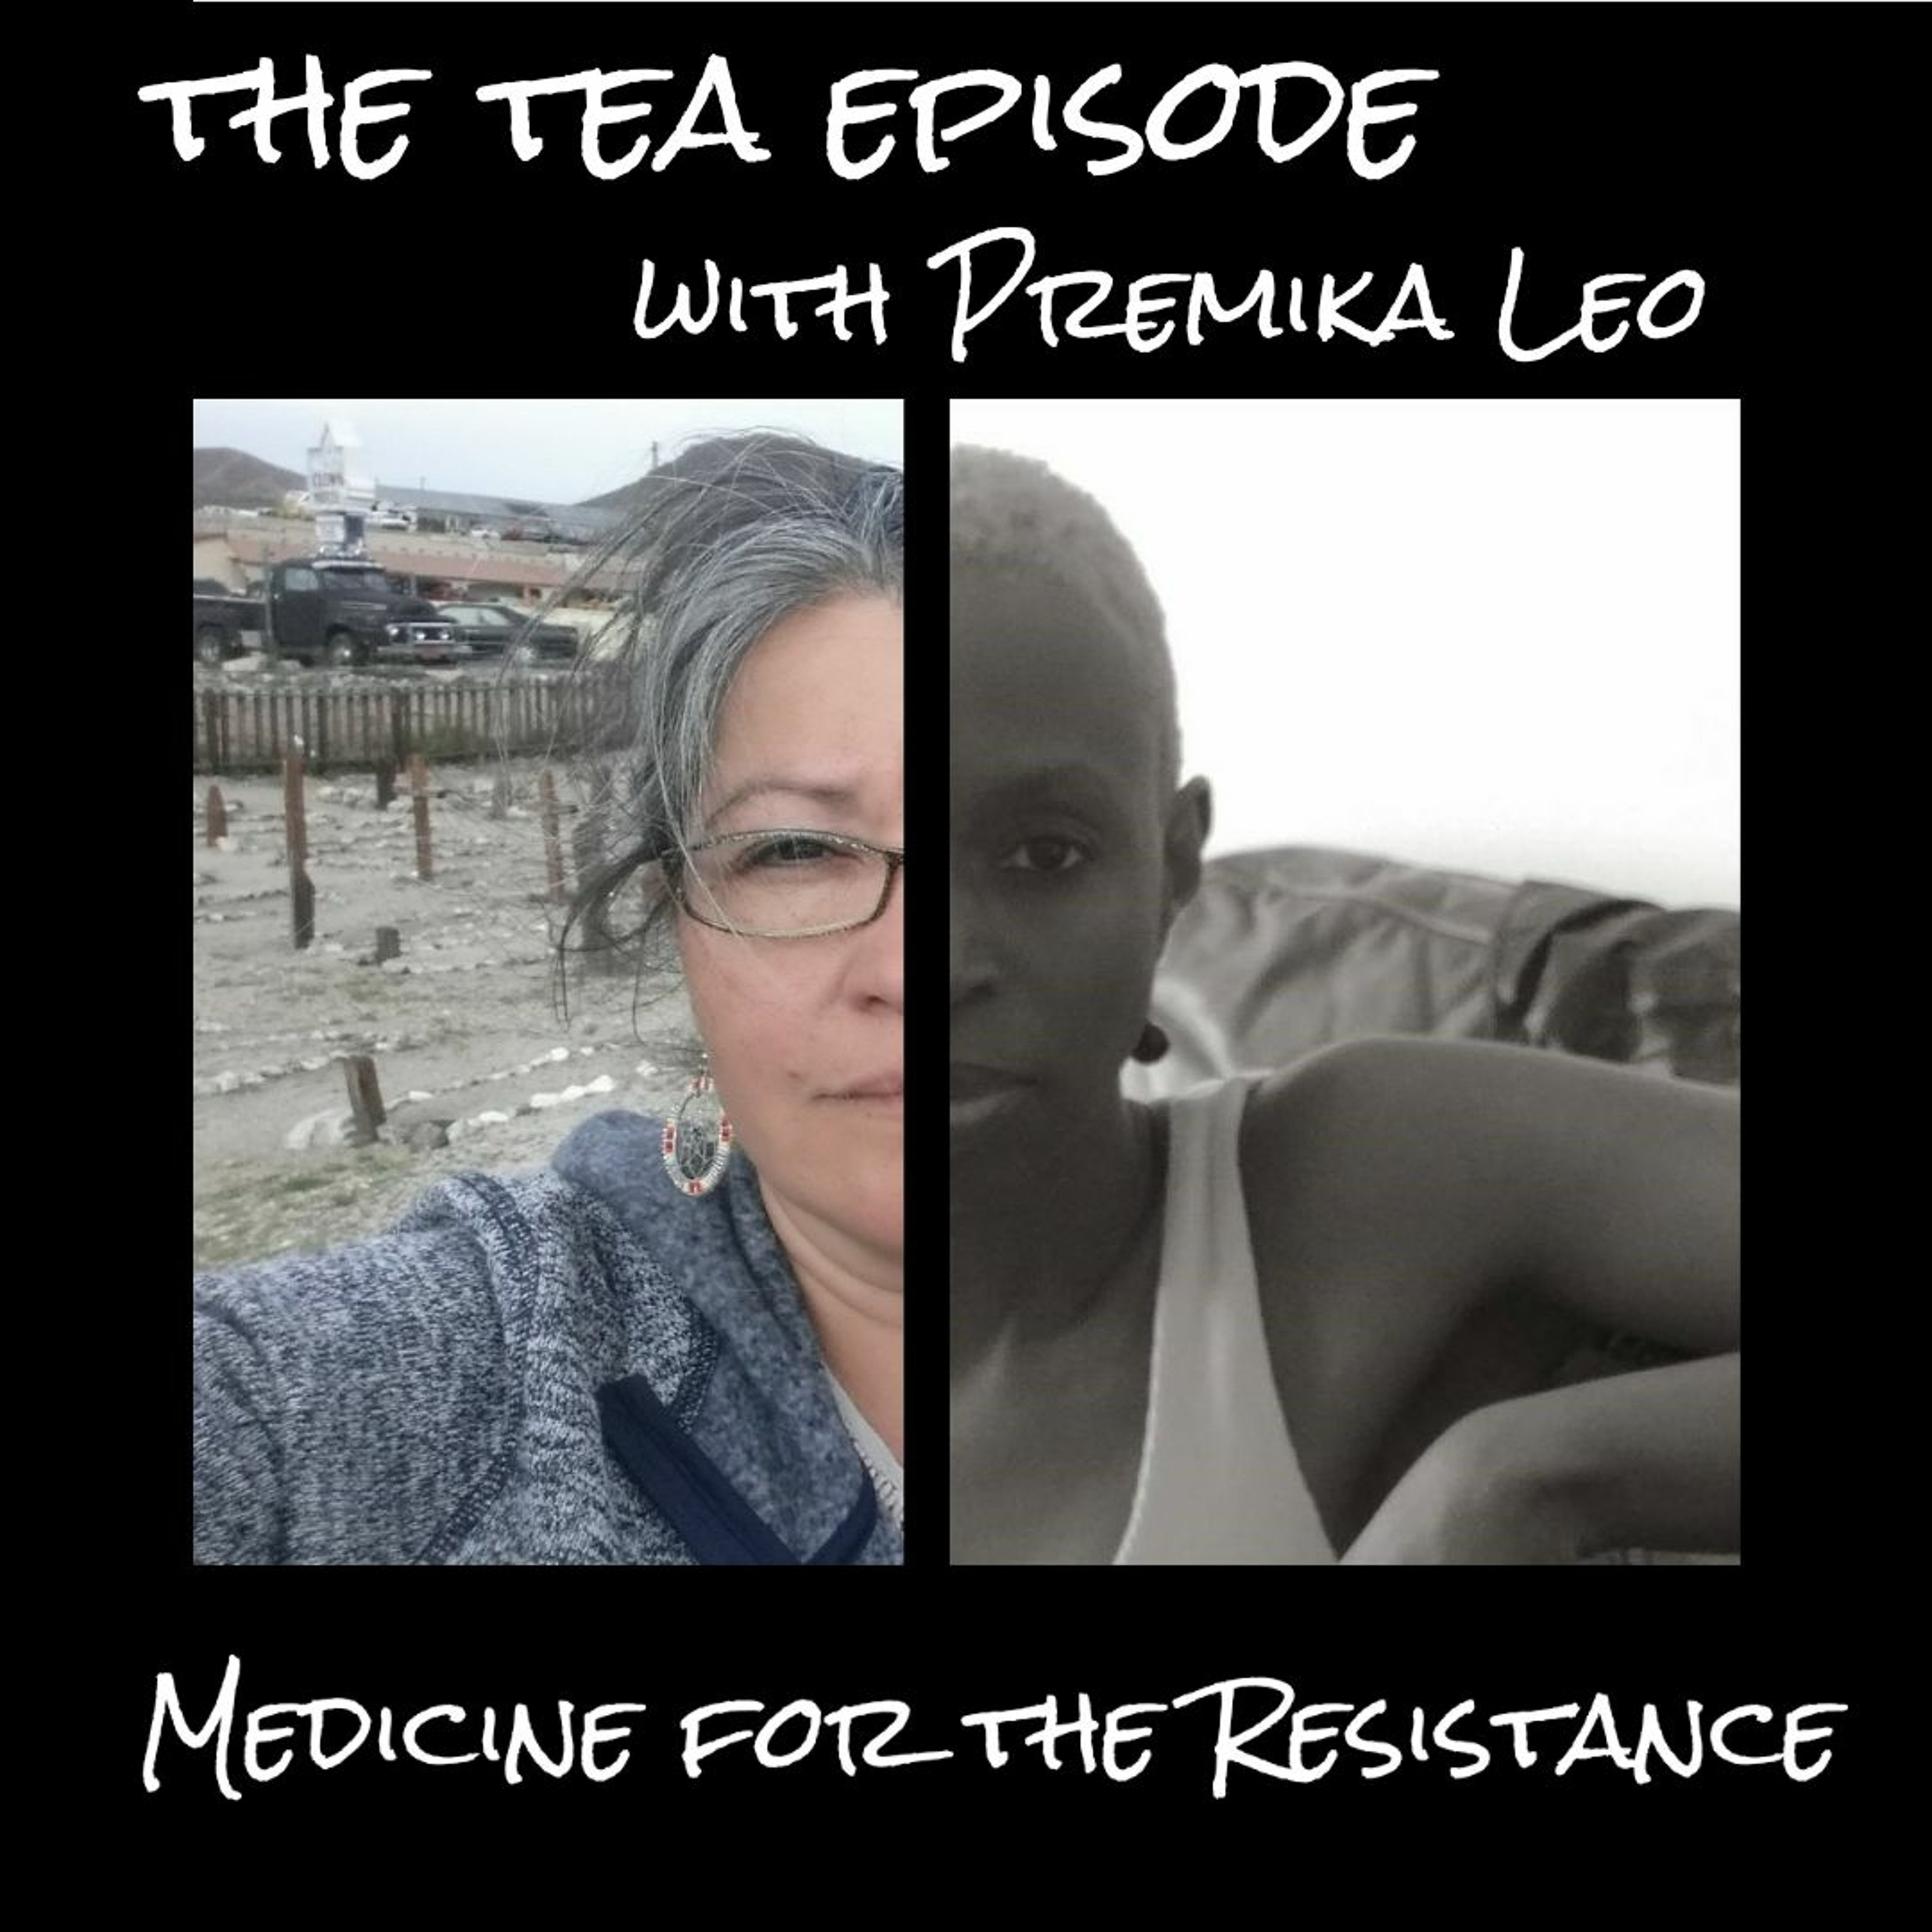 The Tea Episode with Premika Leo